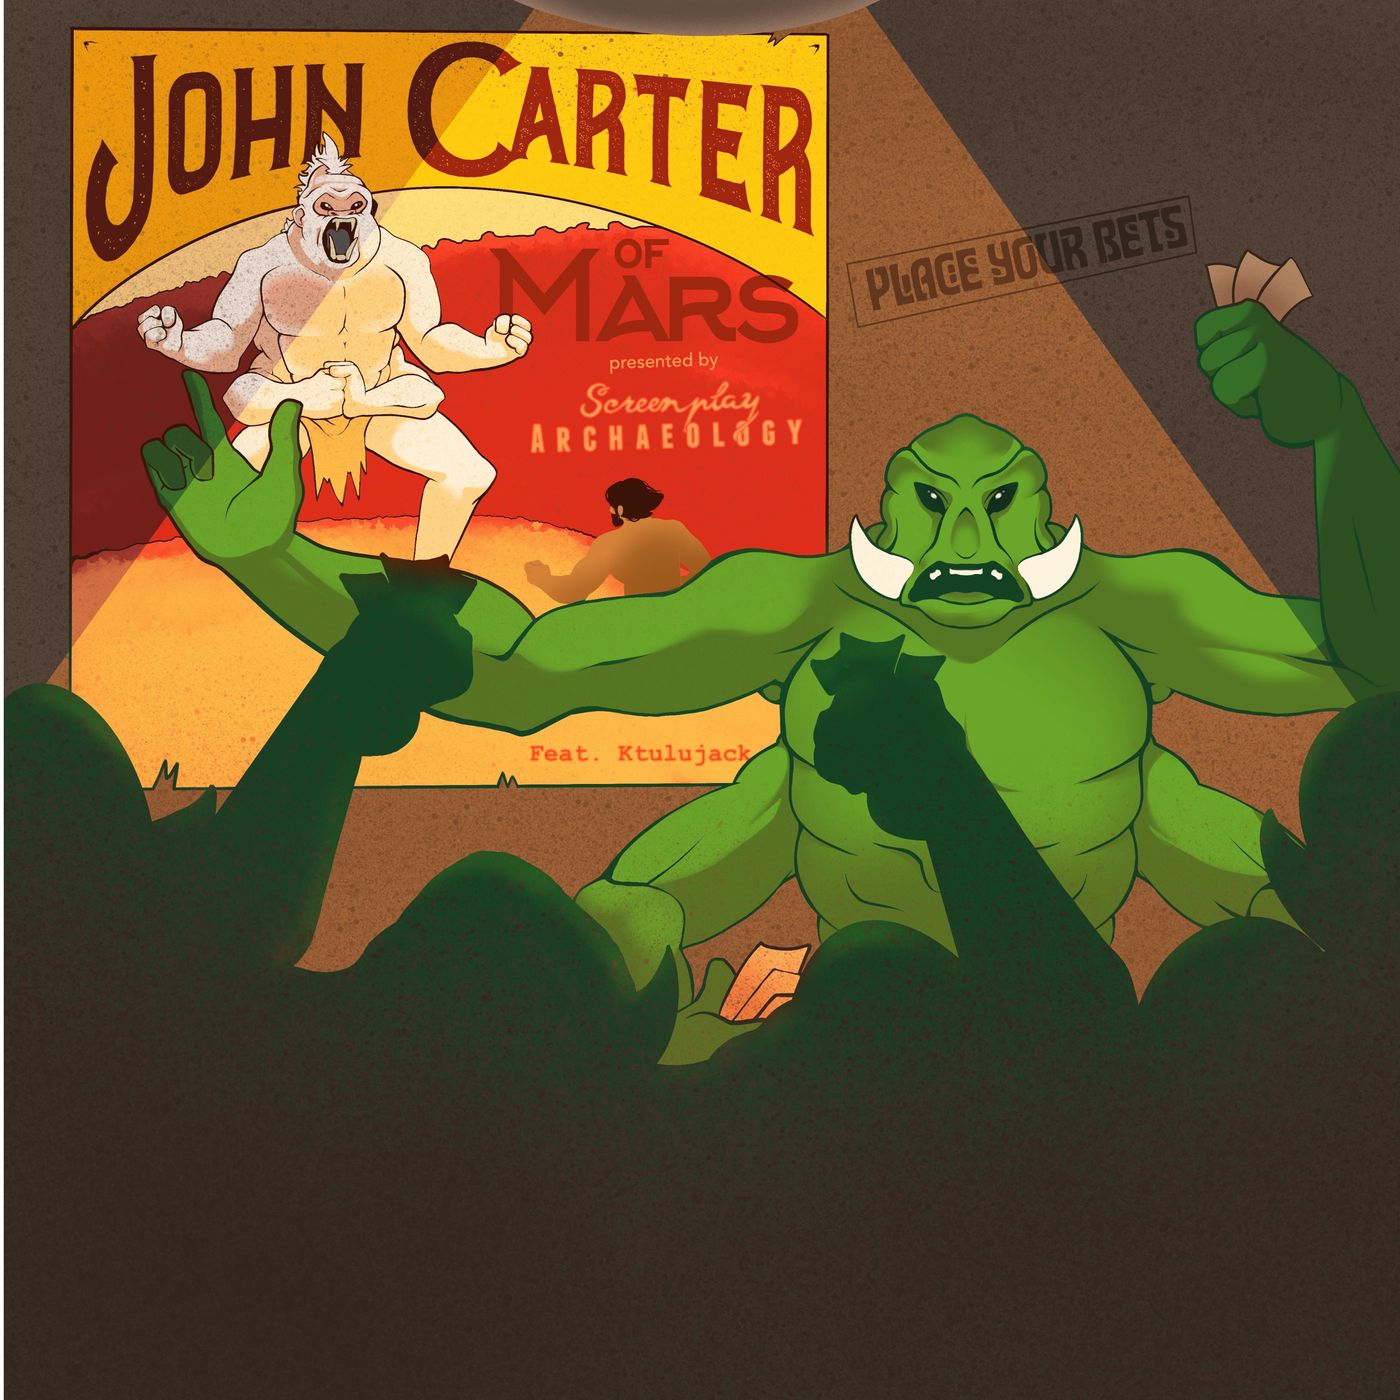 Episode 92: John Carter of Mars